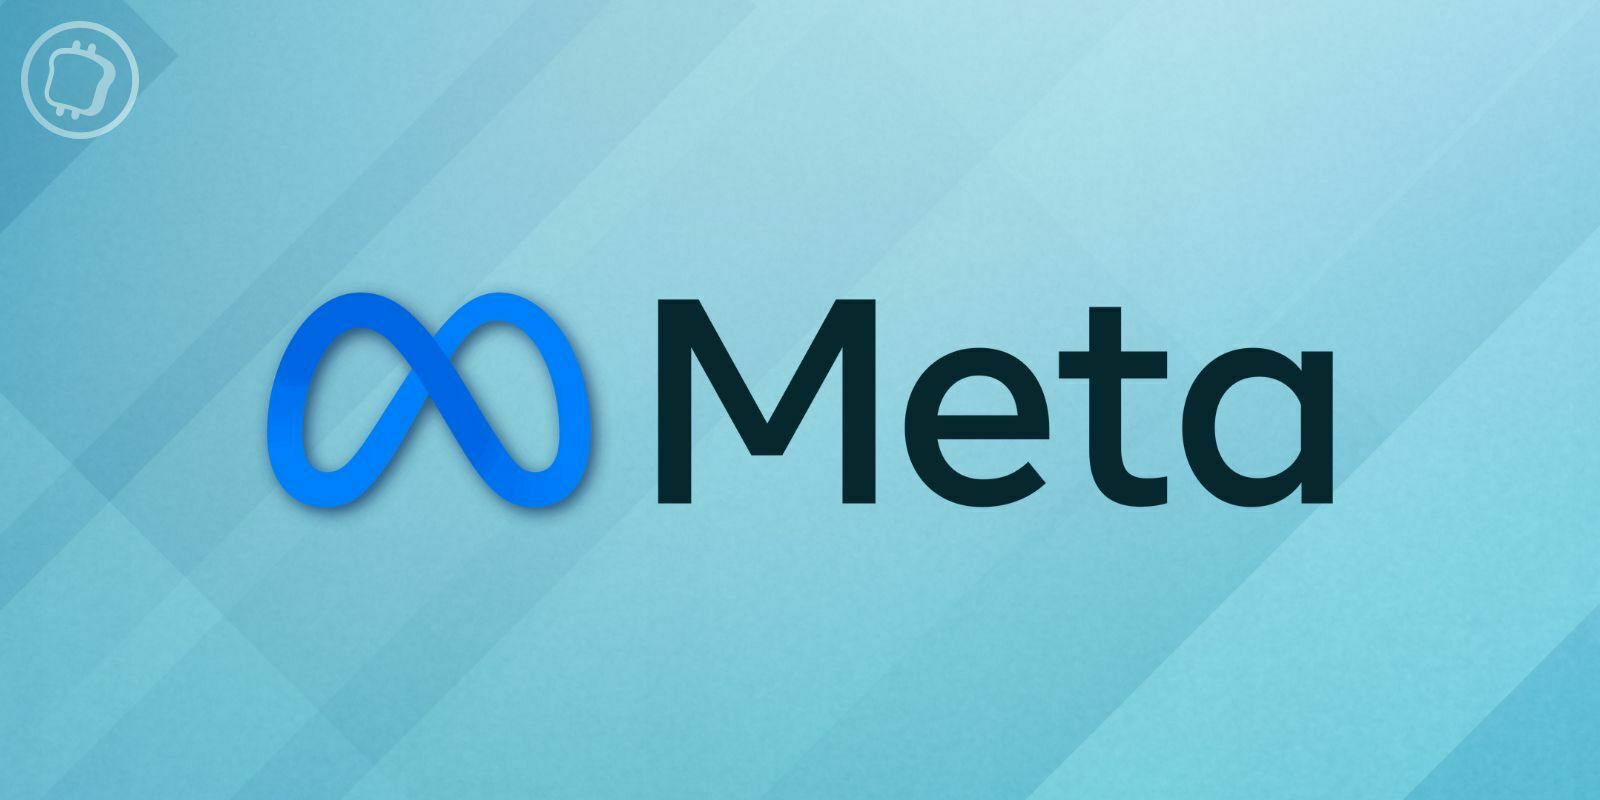 La division metaverse de Meta a perdu 2,81 milliards de dollars ce trimestre